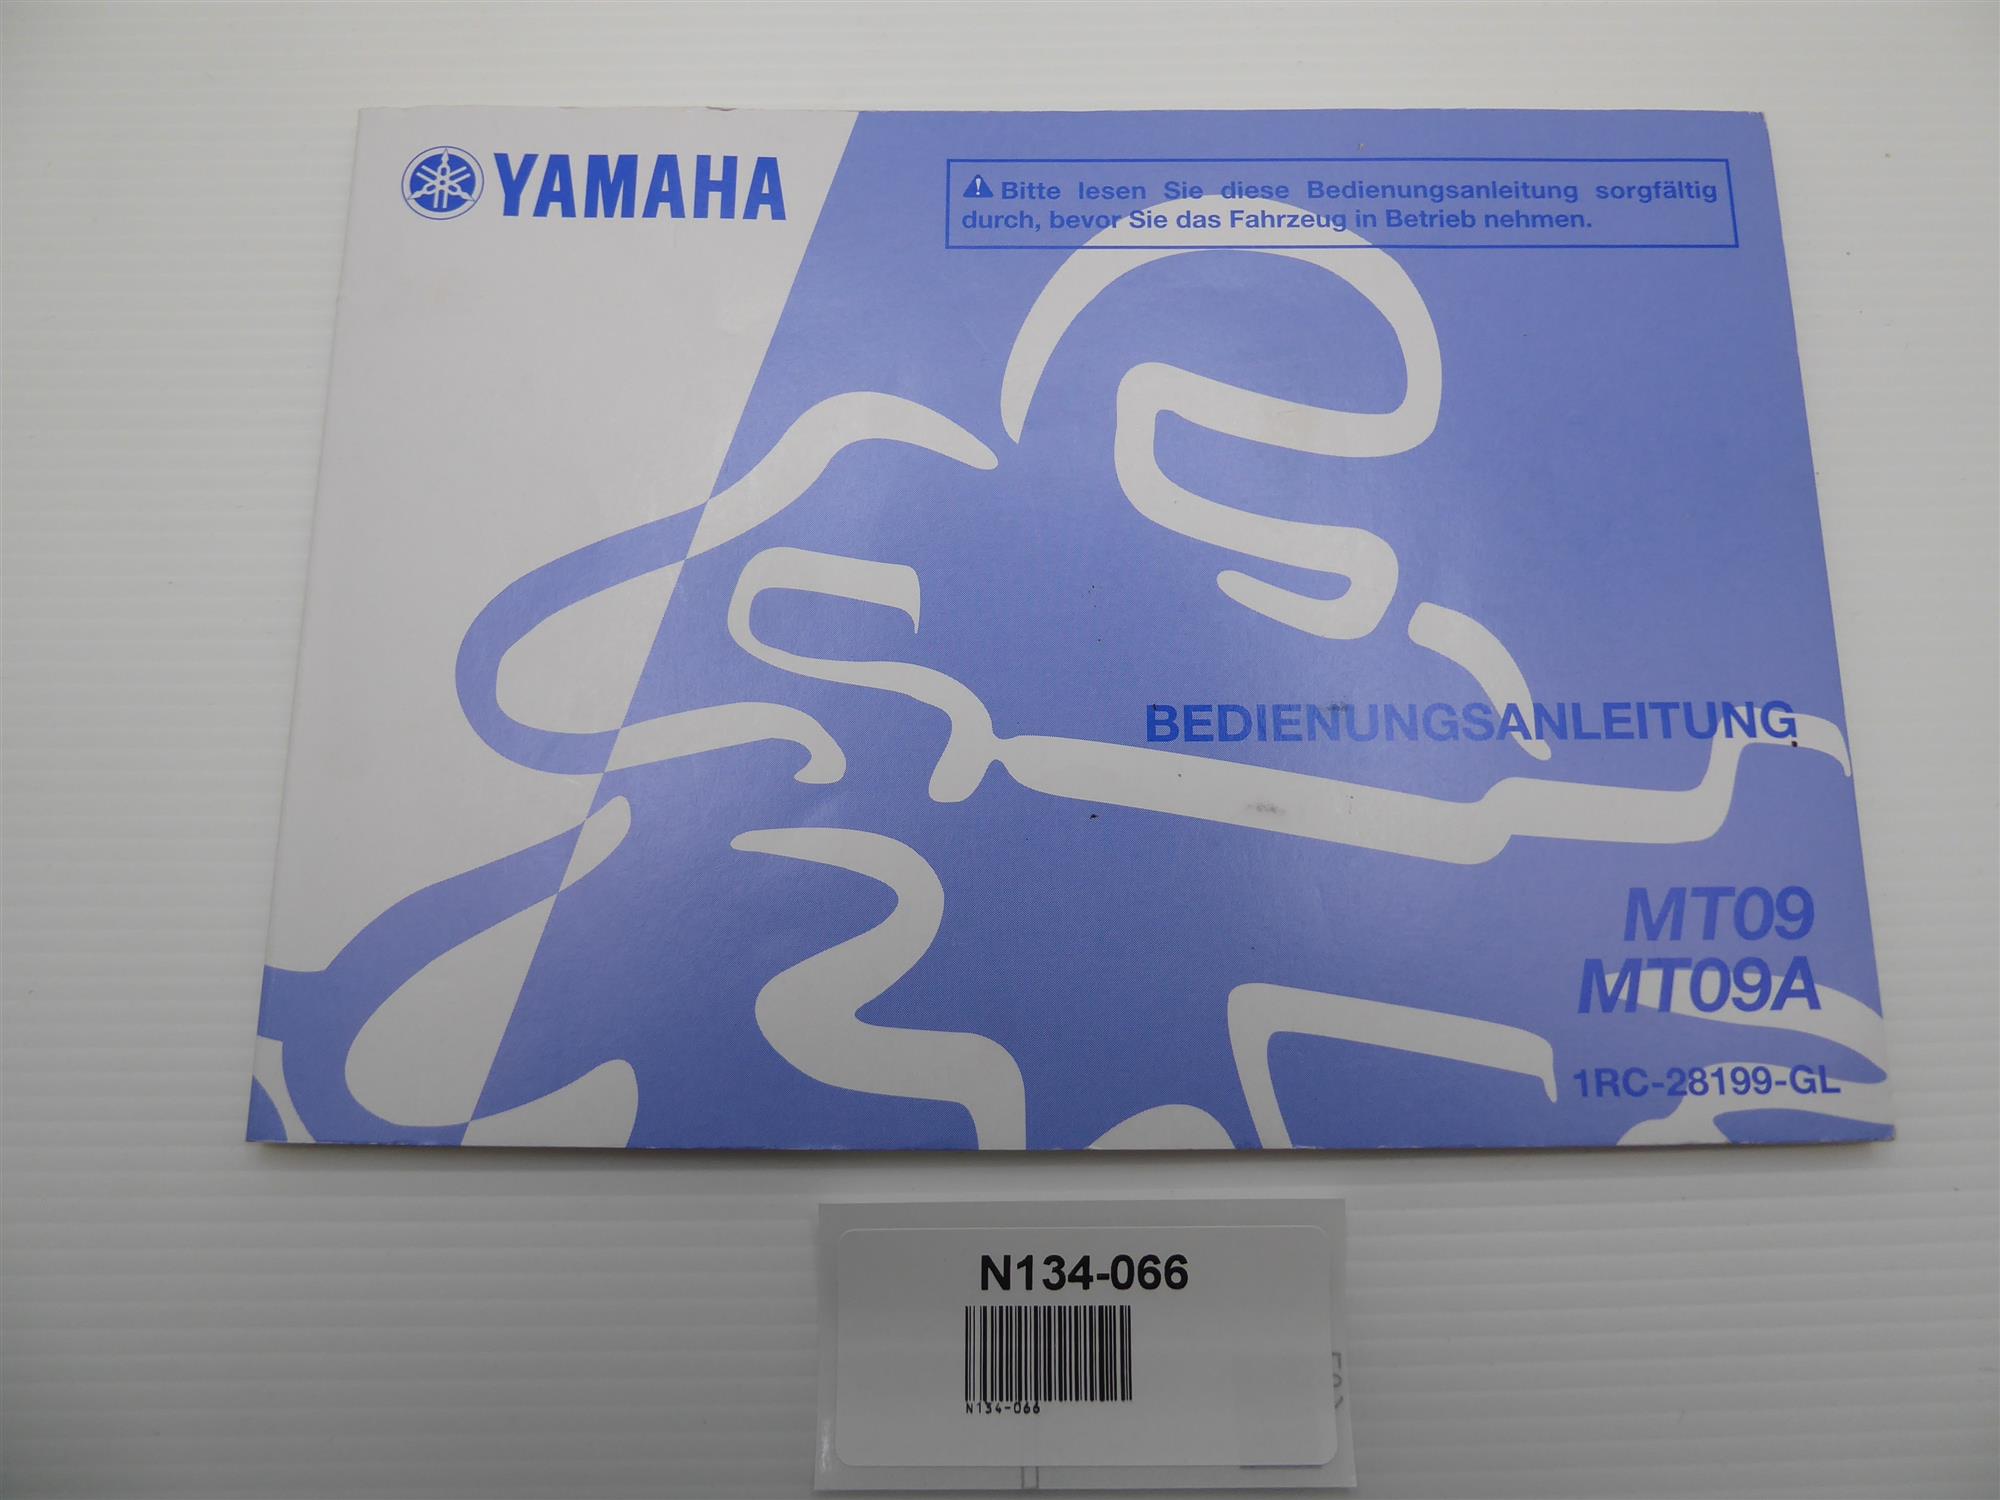 Yamaha MT-09 Bedienungsanleitung 1RC-28199-GL